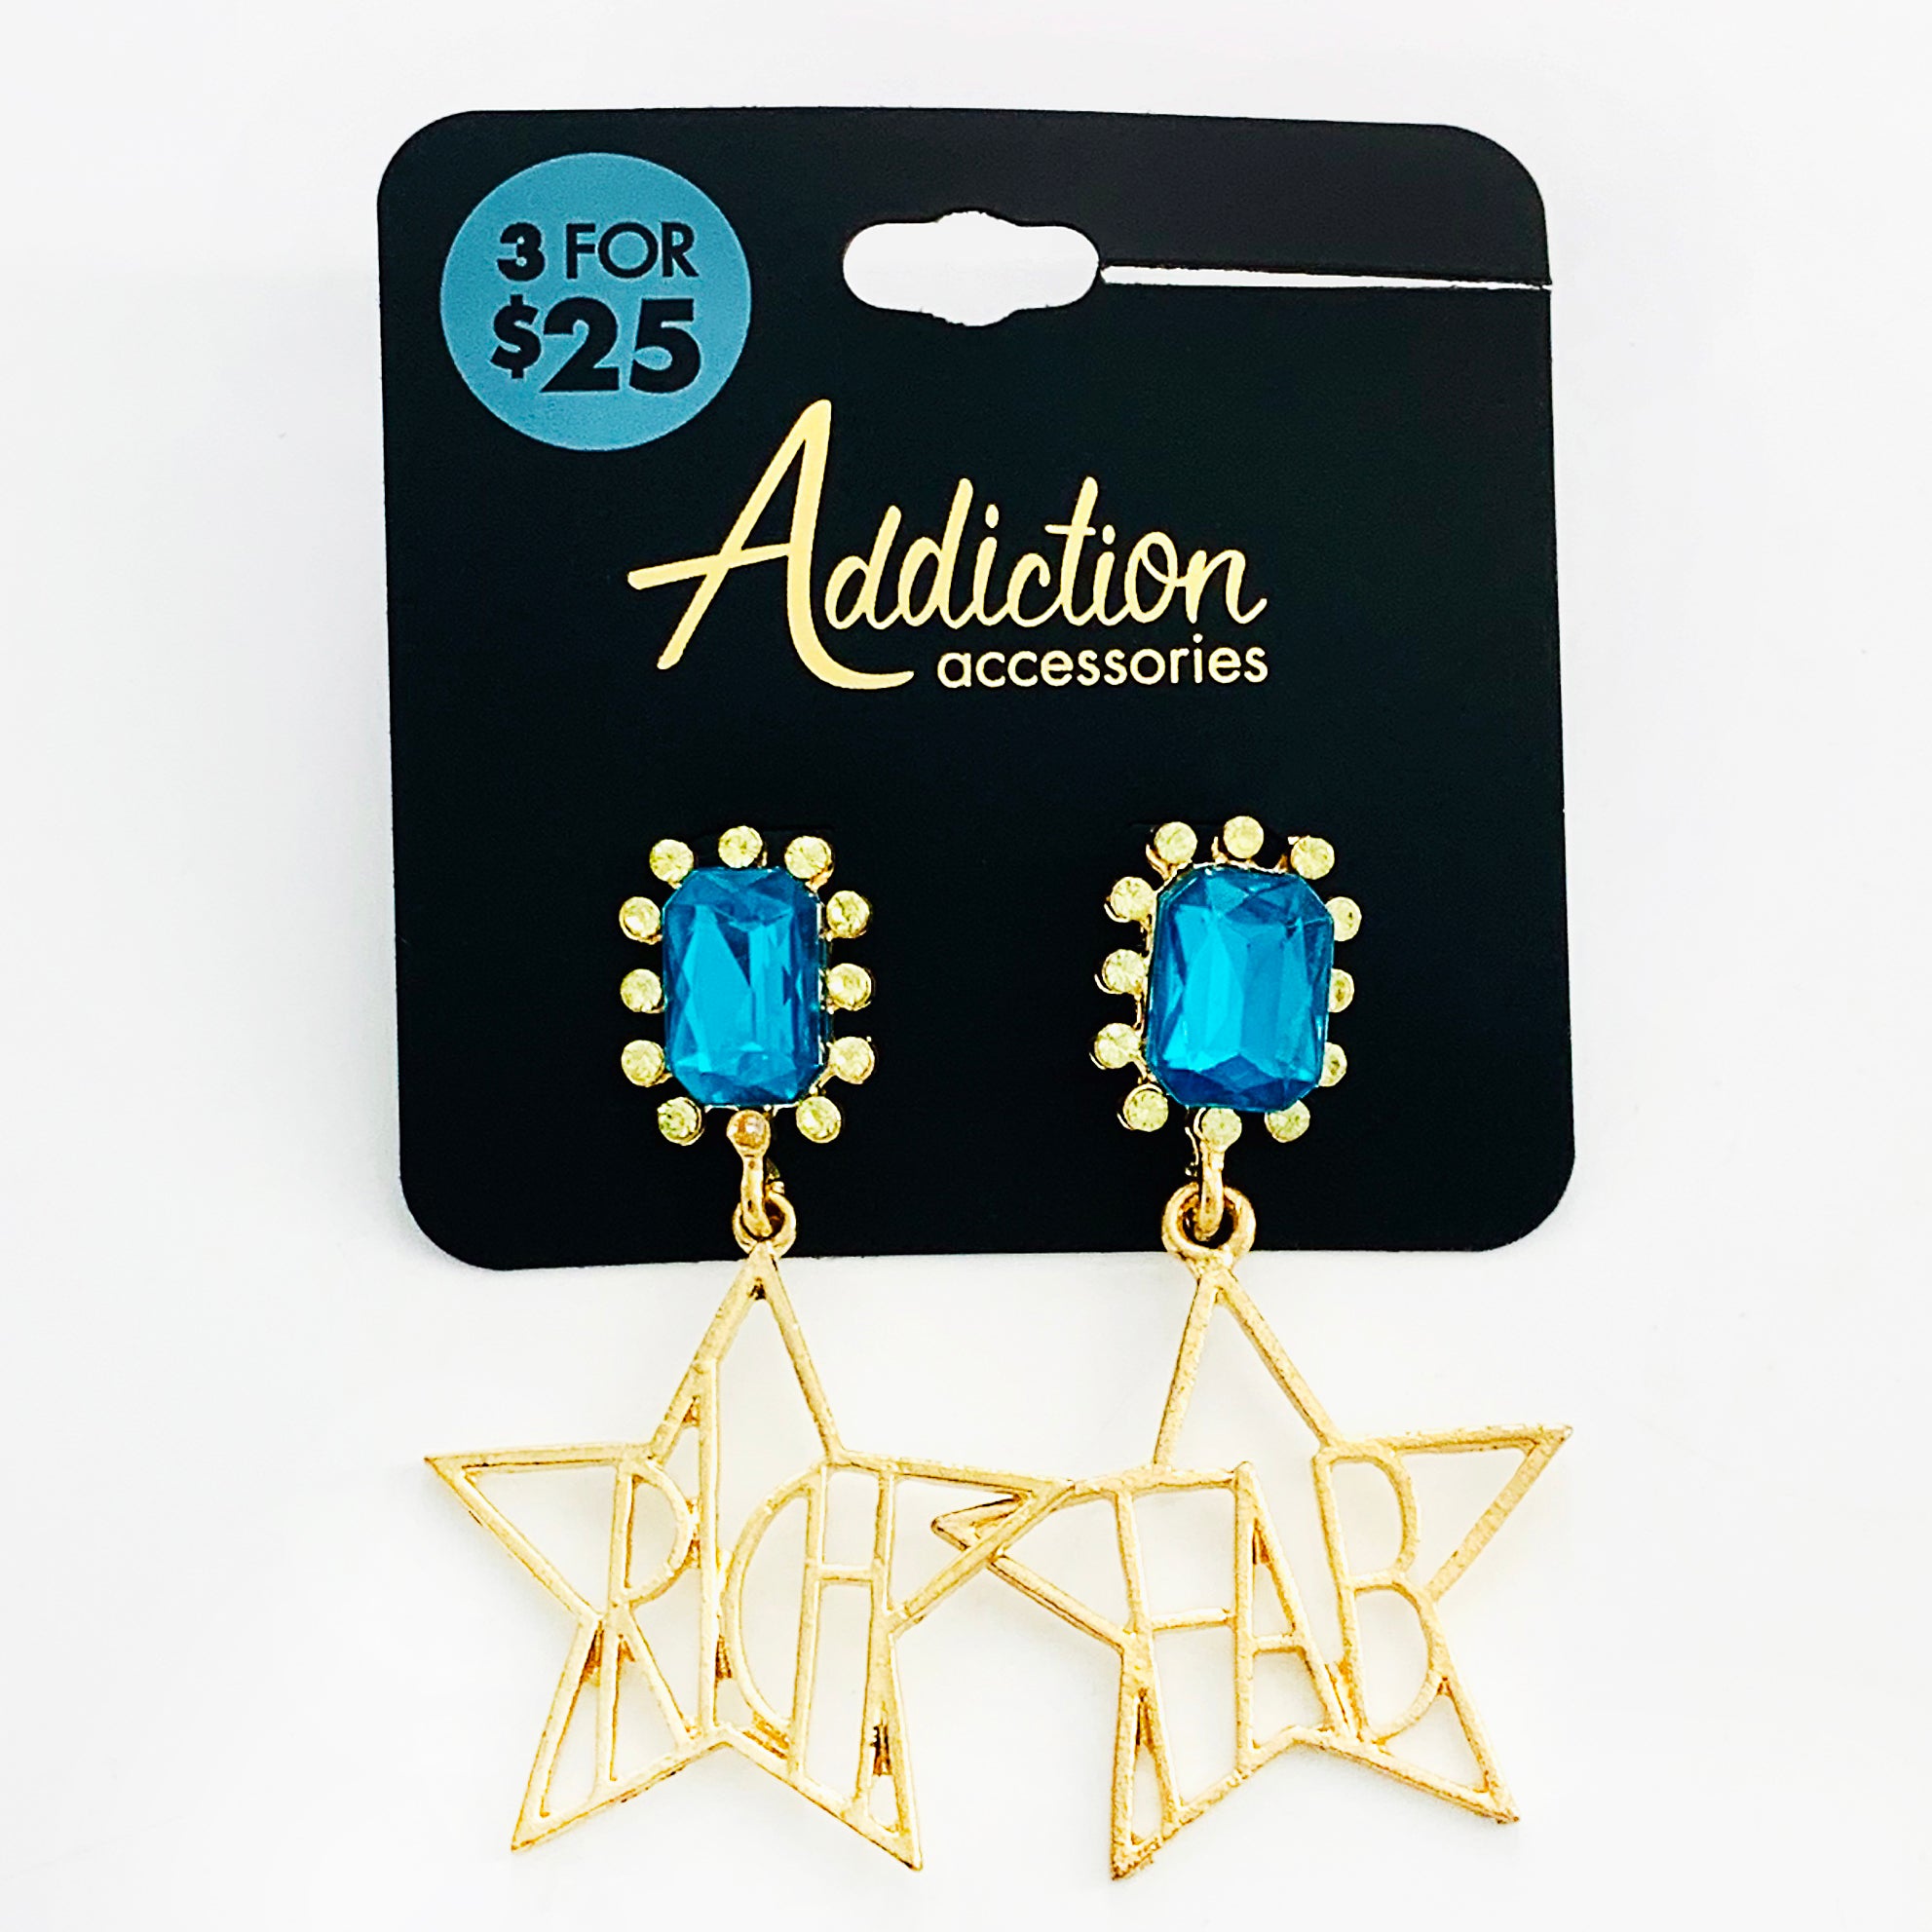 Fabulous star earrings with blue stone